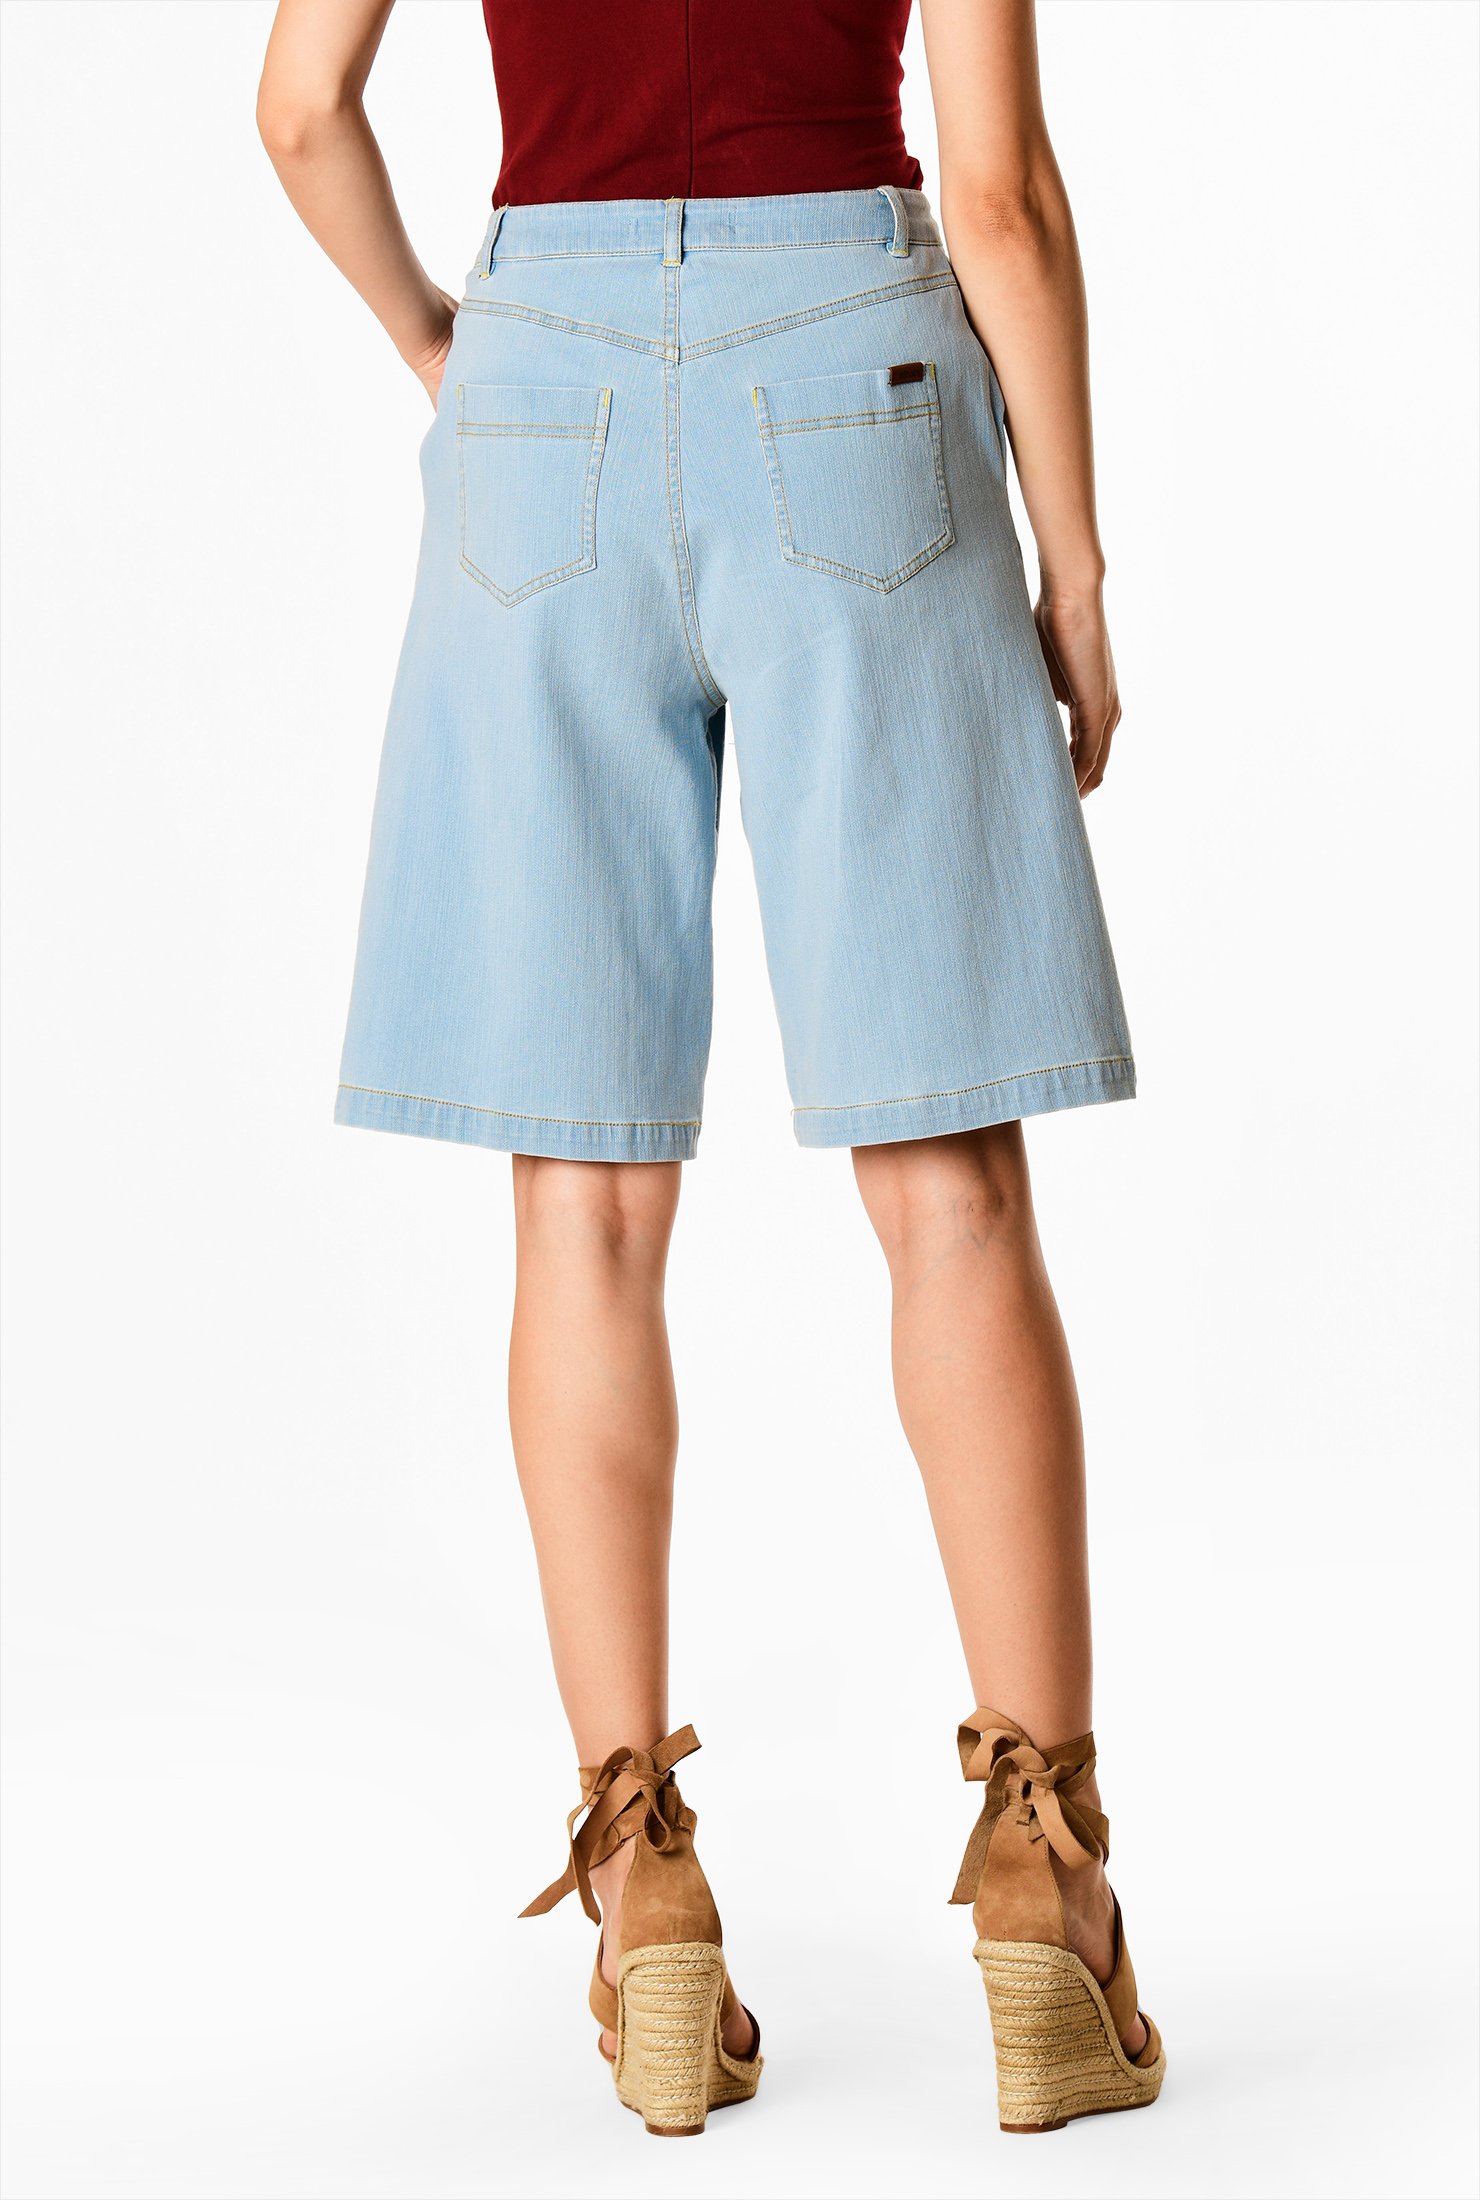 Shop Wide leg denim shorts | eShakti